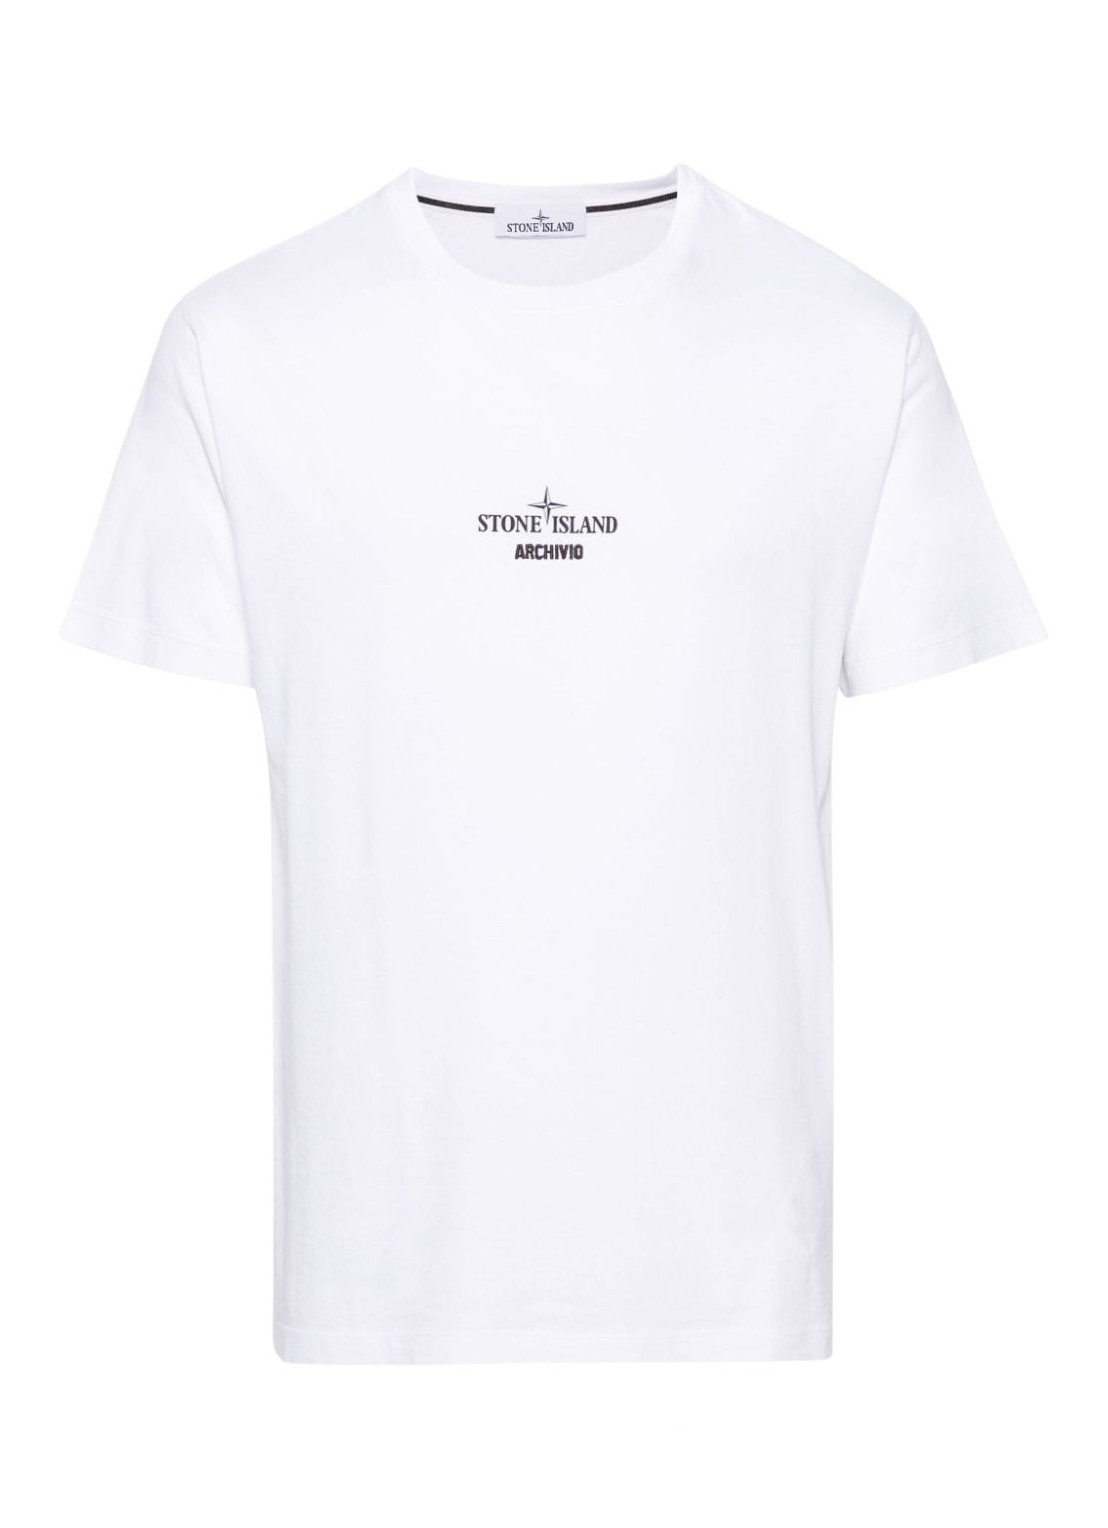 Camiseta stone island t-shirt man t shirt 80152ns91 v0001 talla M
 